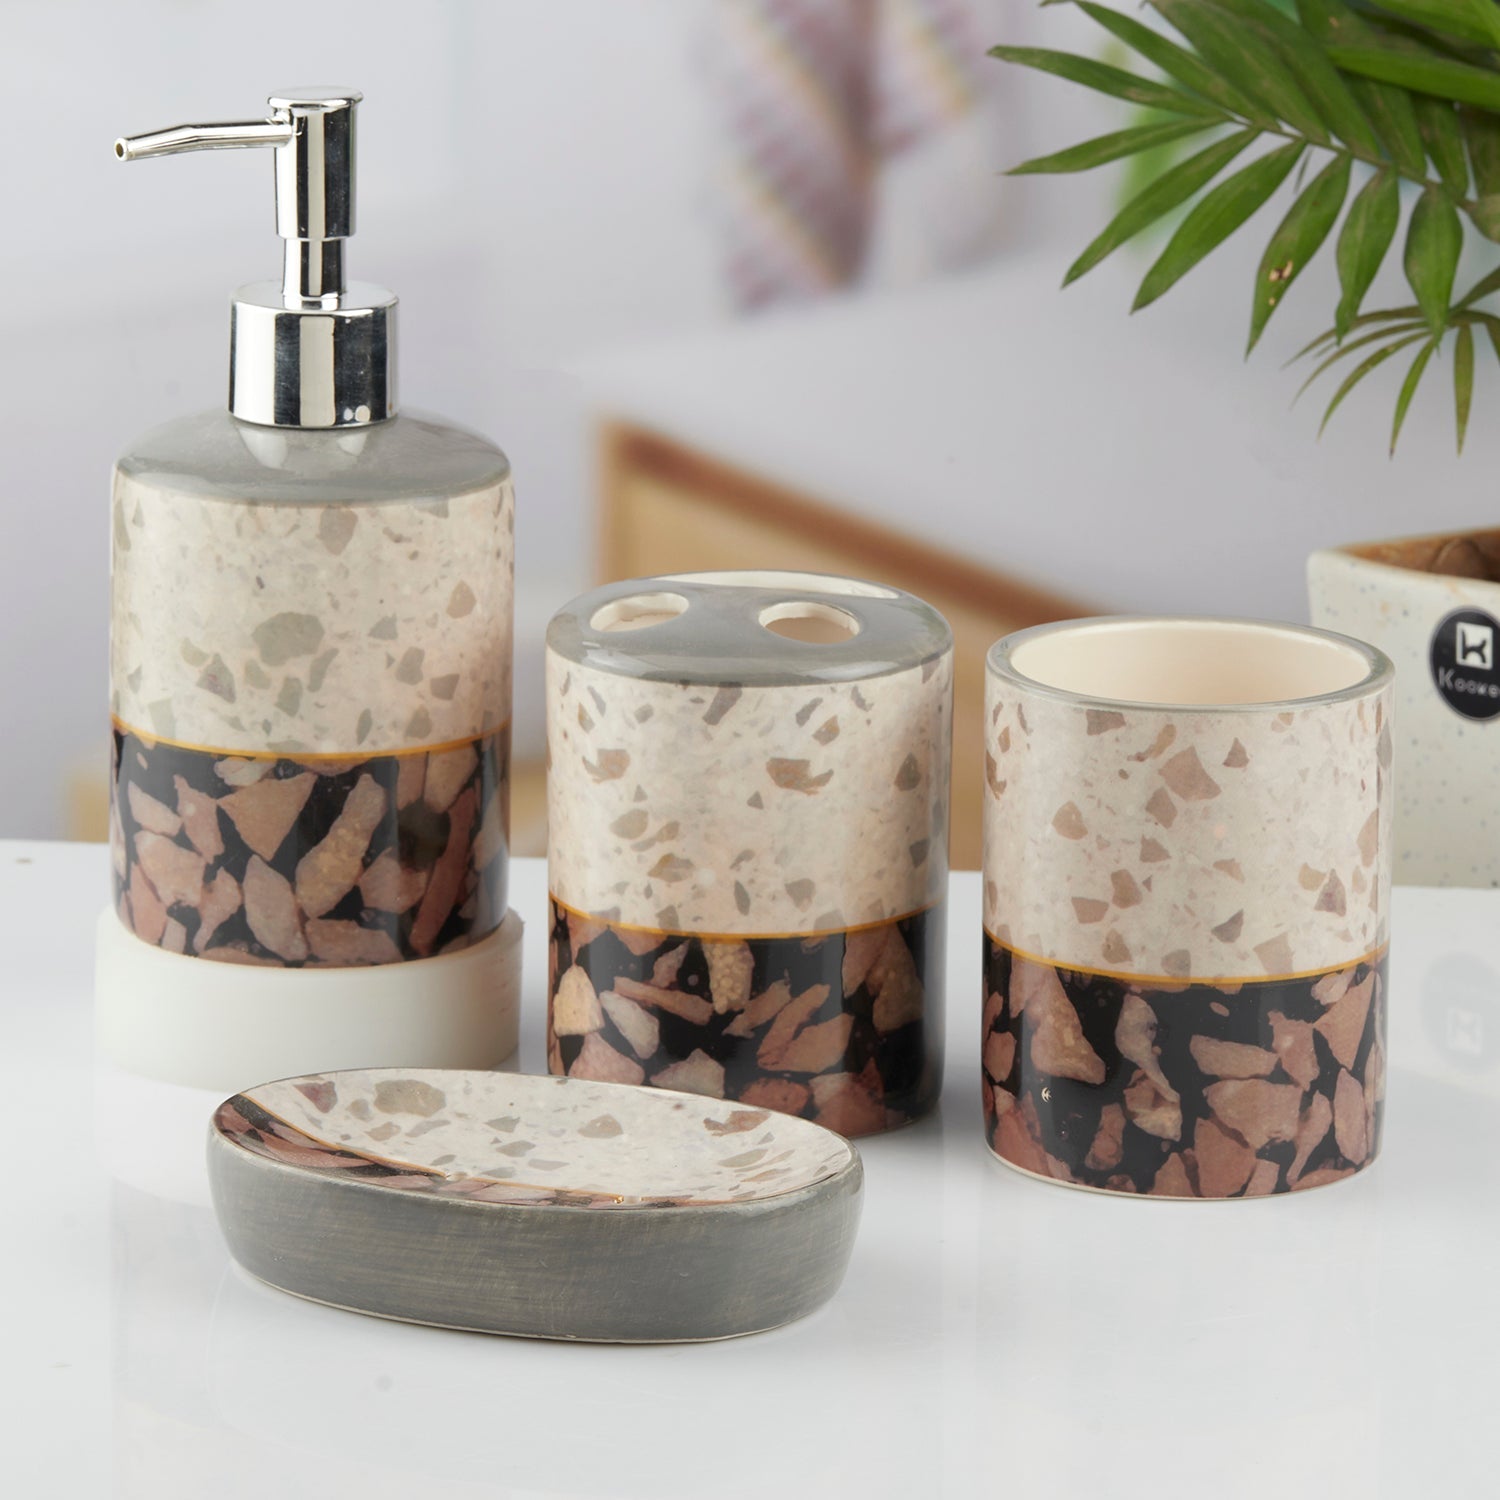 Ceramic Bathroom Set of 4 with Soap Dispenser (10472)